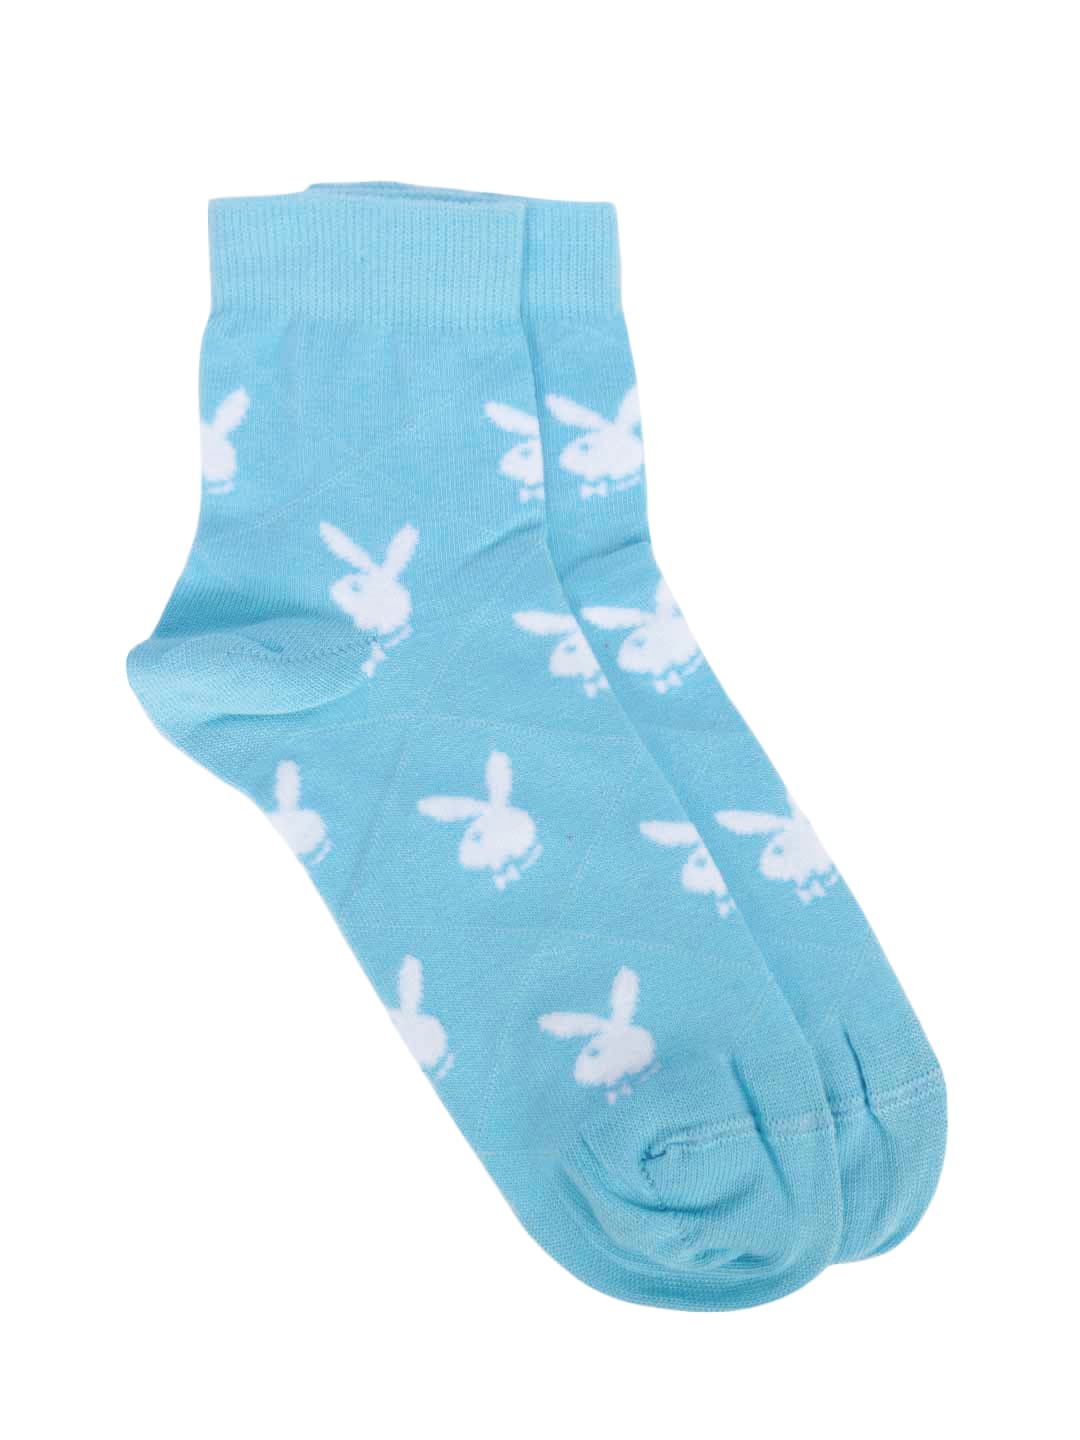 Playboy Women Playmate Blue Ankle Socks